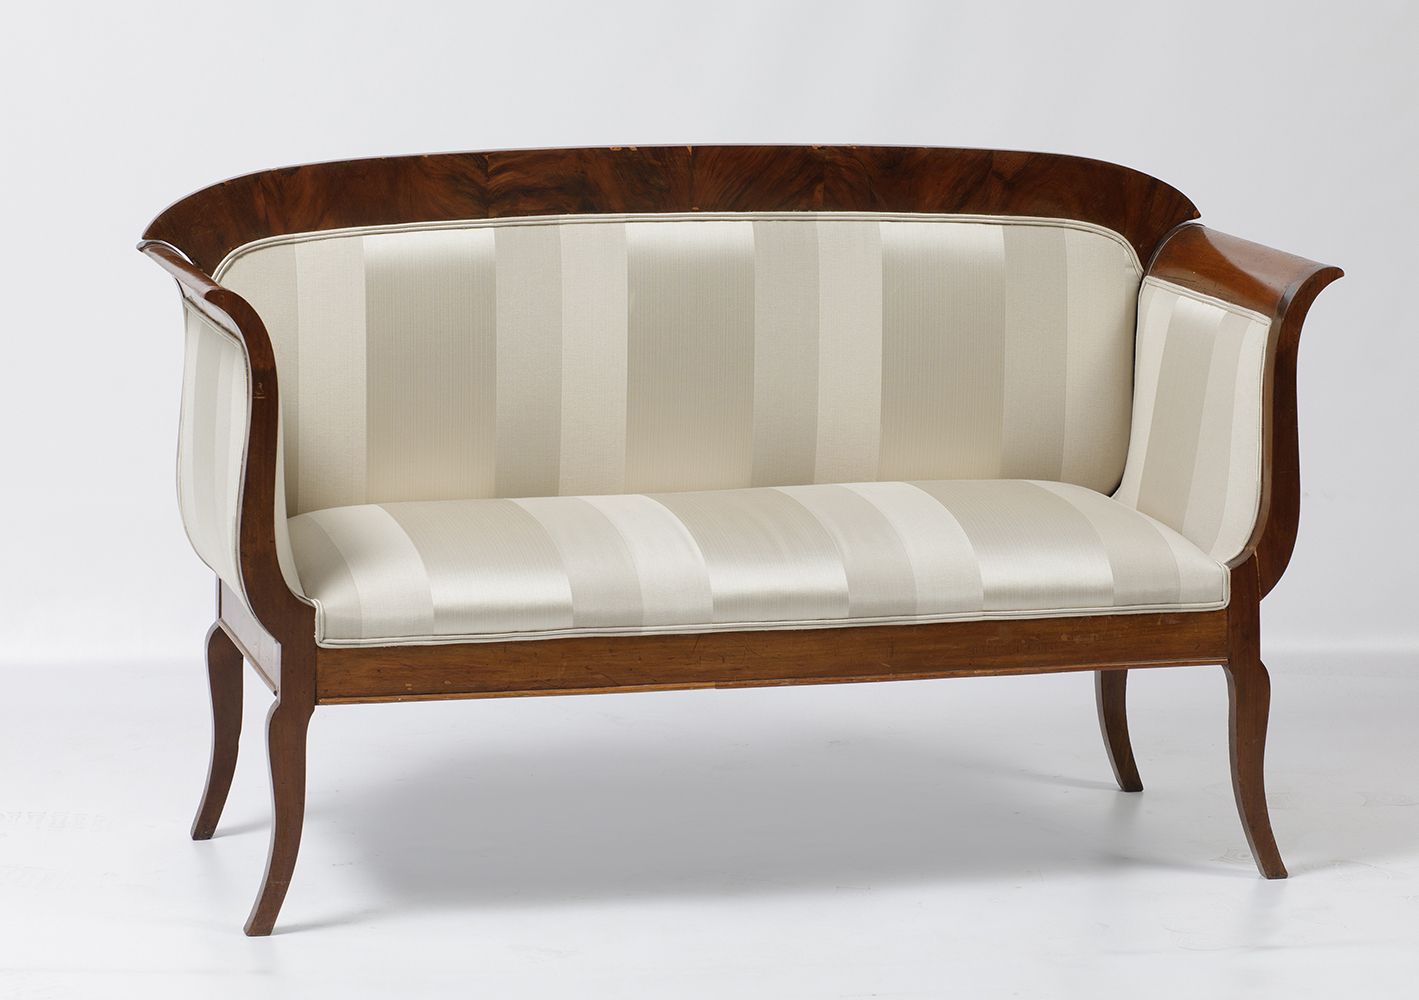 Sofa in mahogany palm S.XIX英国桃花心木沙发.92 x 15 x 54 厘米。